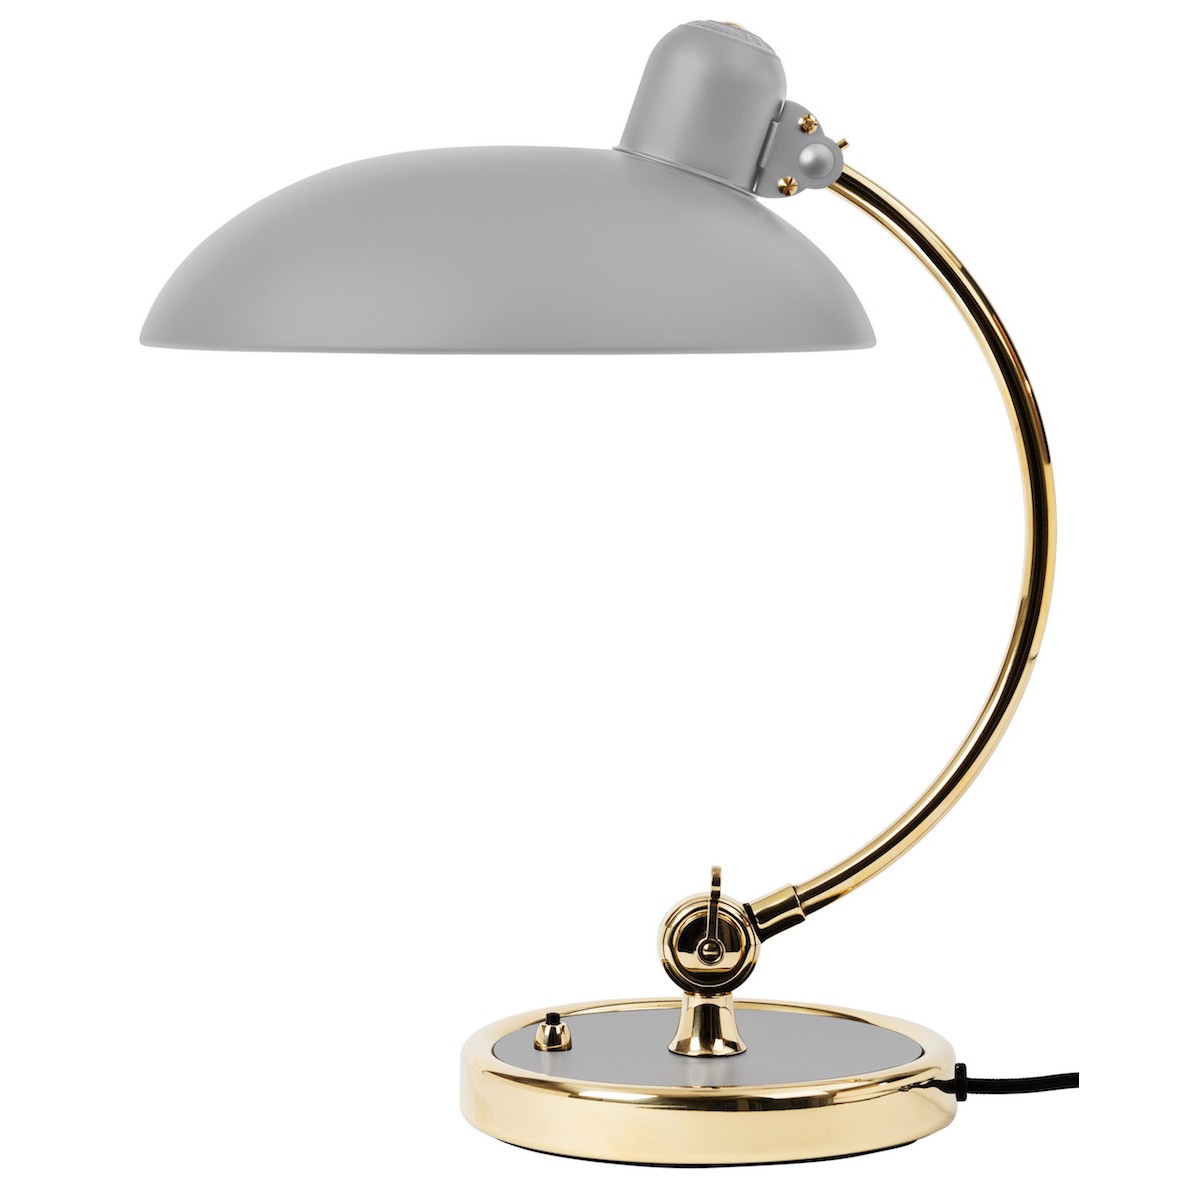 matt grey / brass - table lamp Luxus Kaiser idell - 6631-T